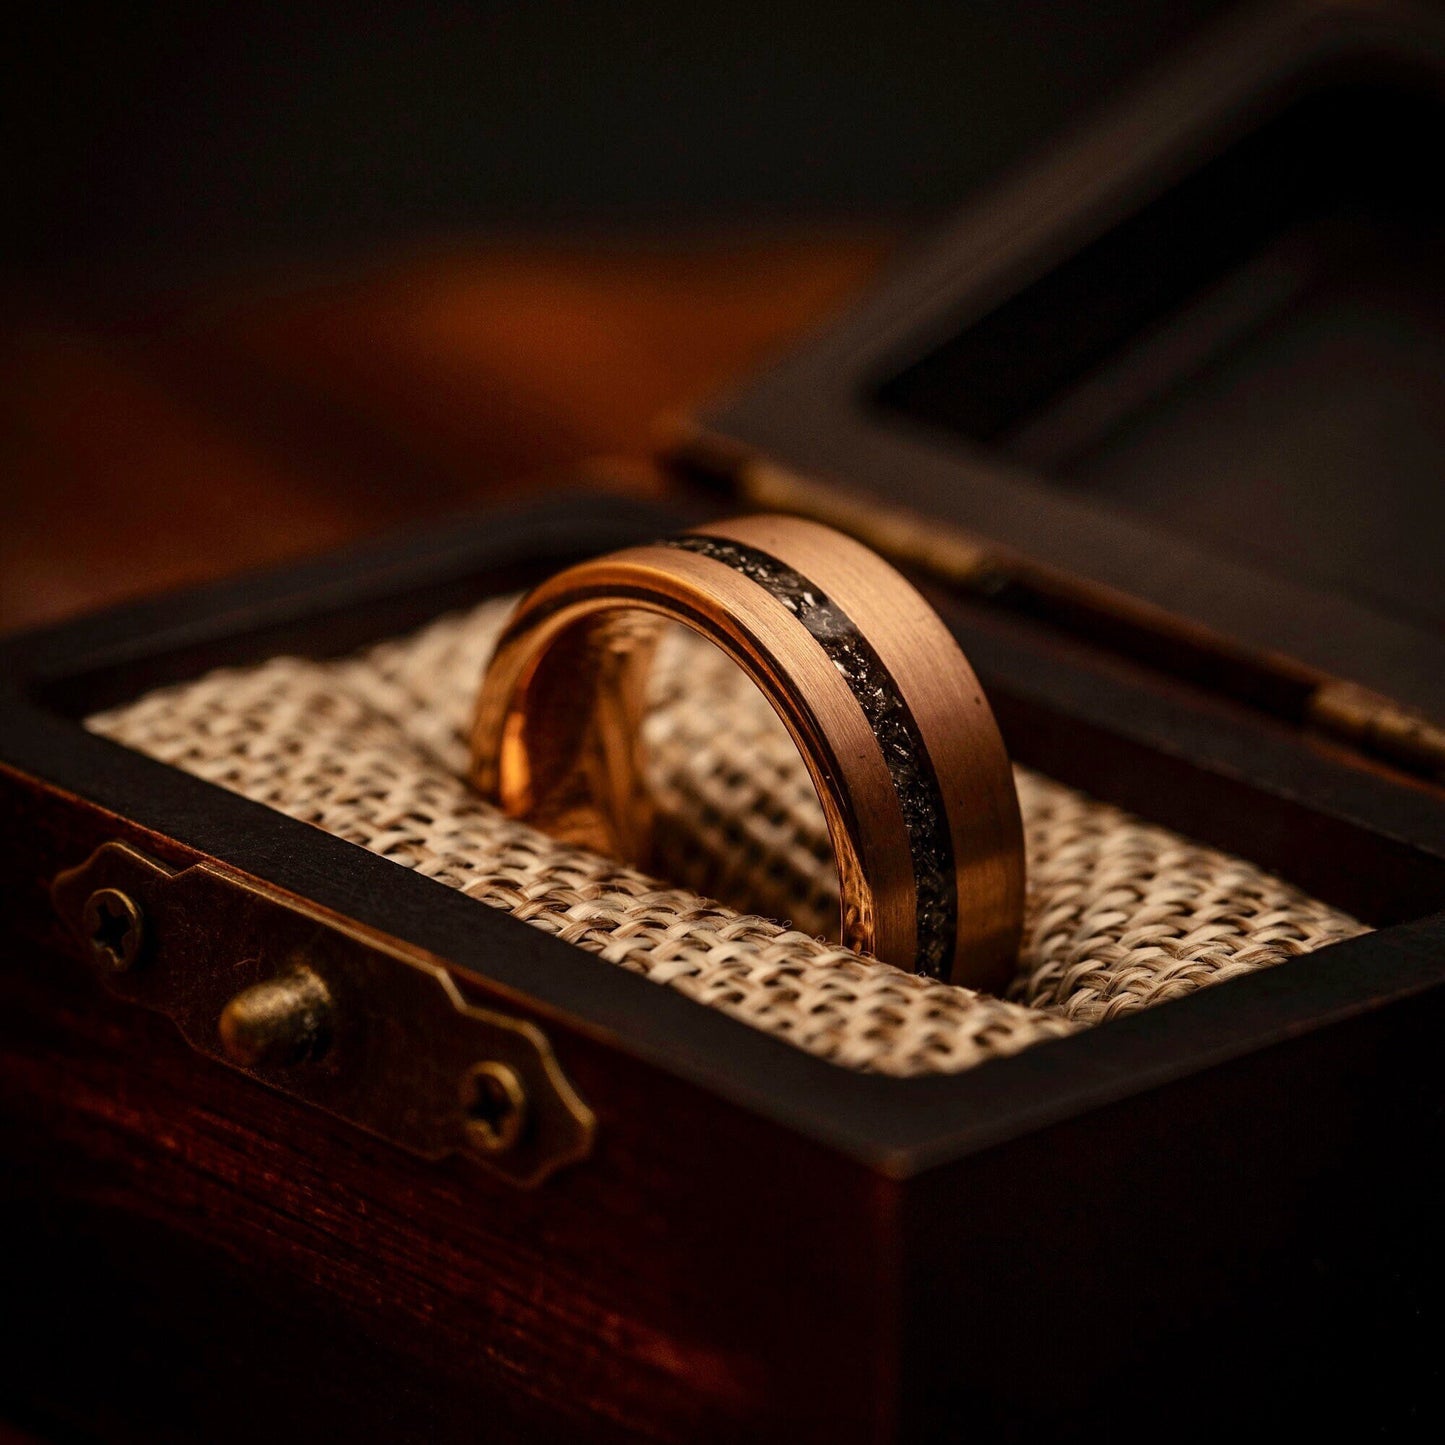 Distinctive rose gold wedding ring with genuine meteorite inlay, symbolizing eternal love.